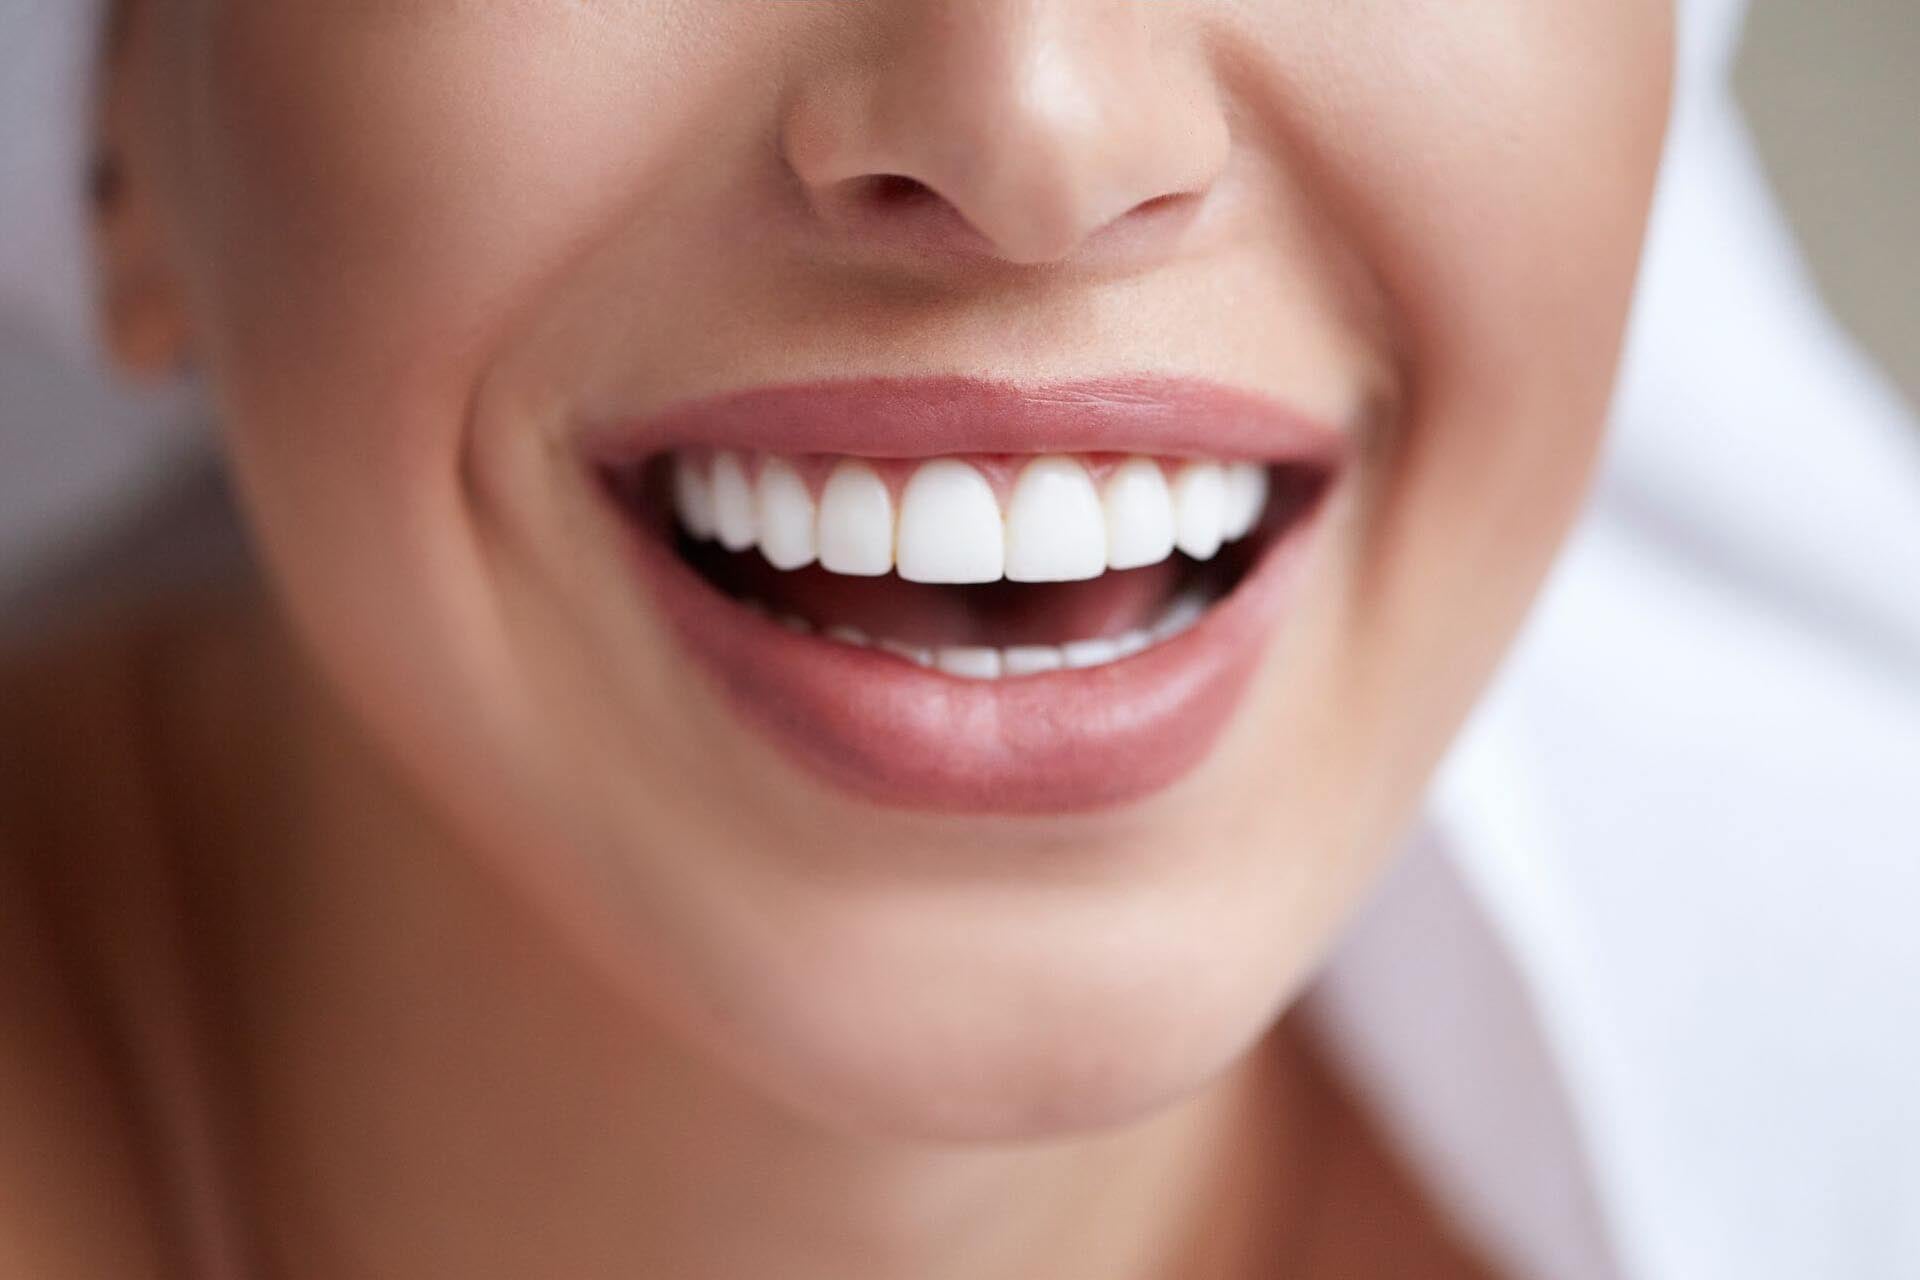 What a dental hygienist said about Glacier Teeth Whitening